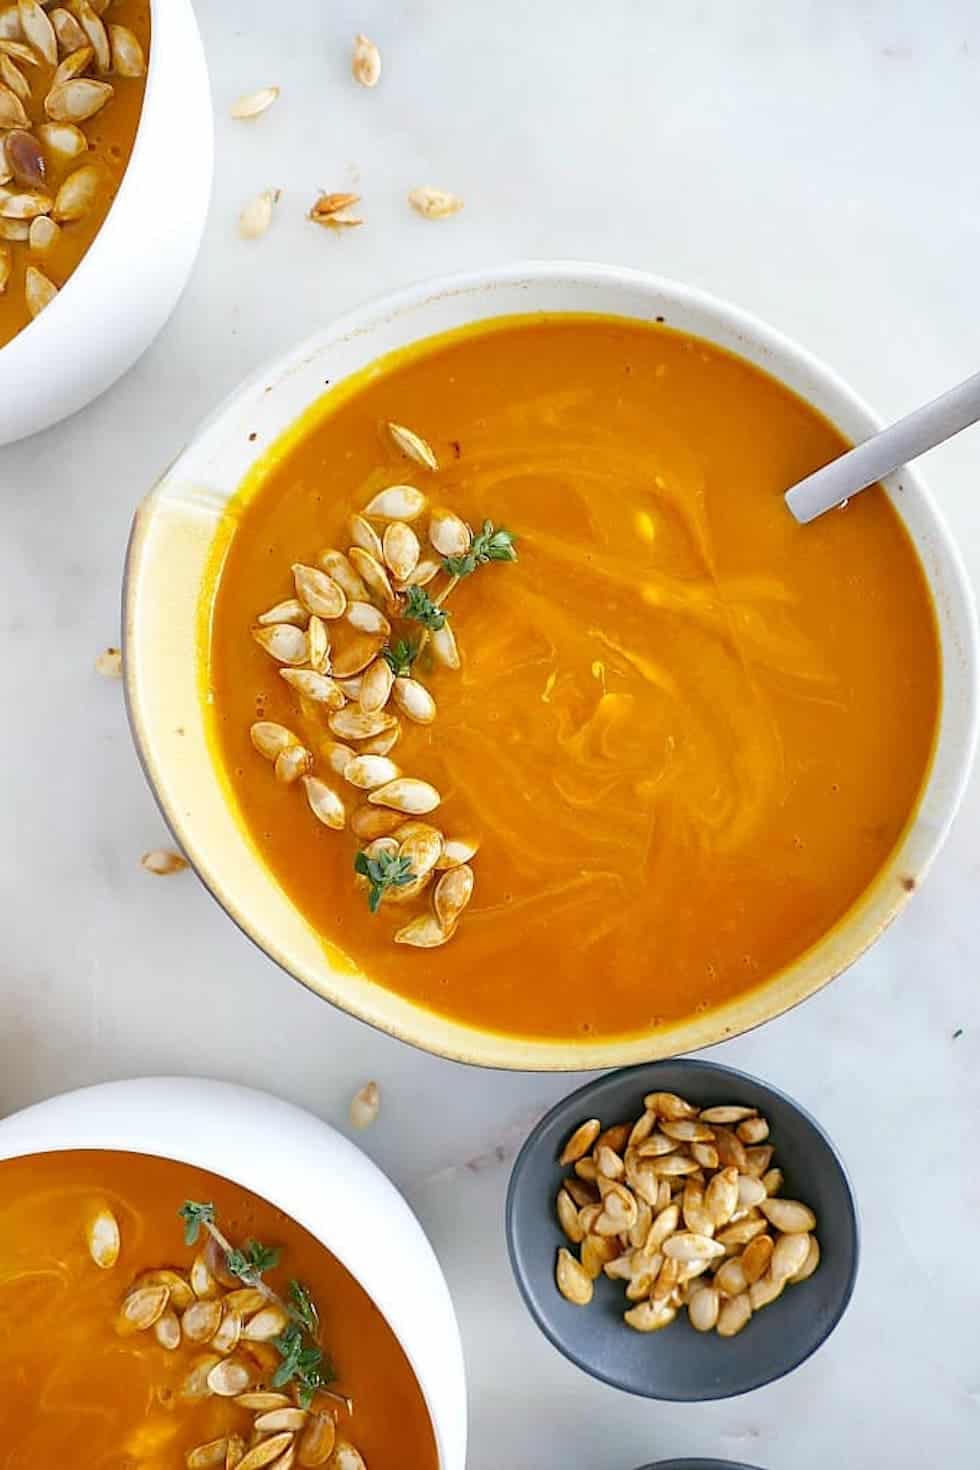 Orange squash soup in yellow ceramic bowl.